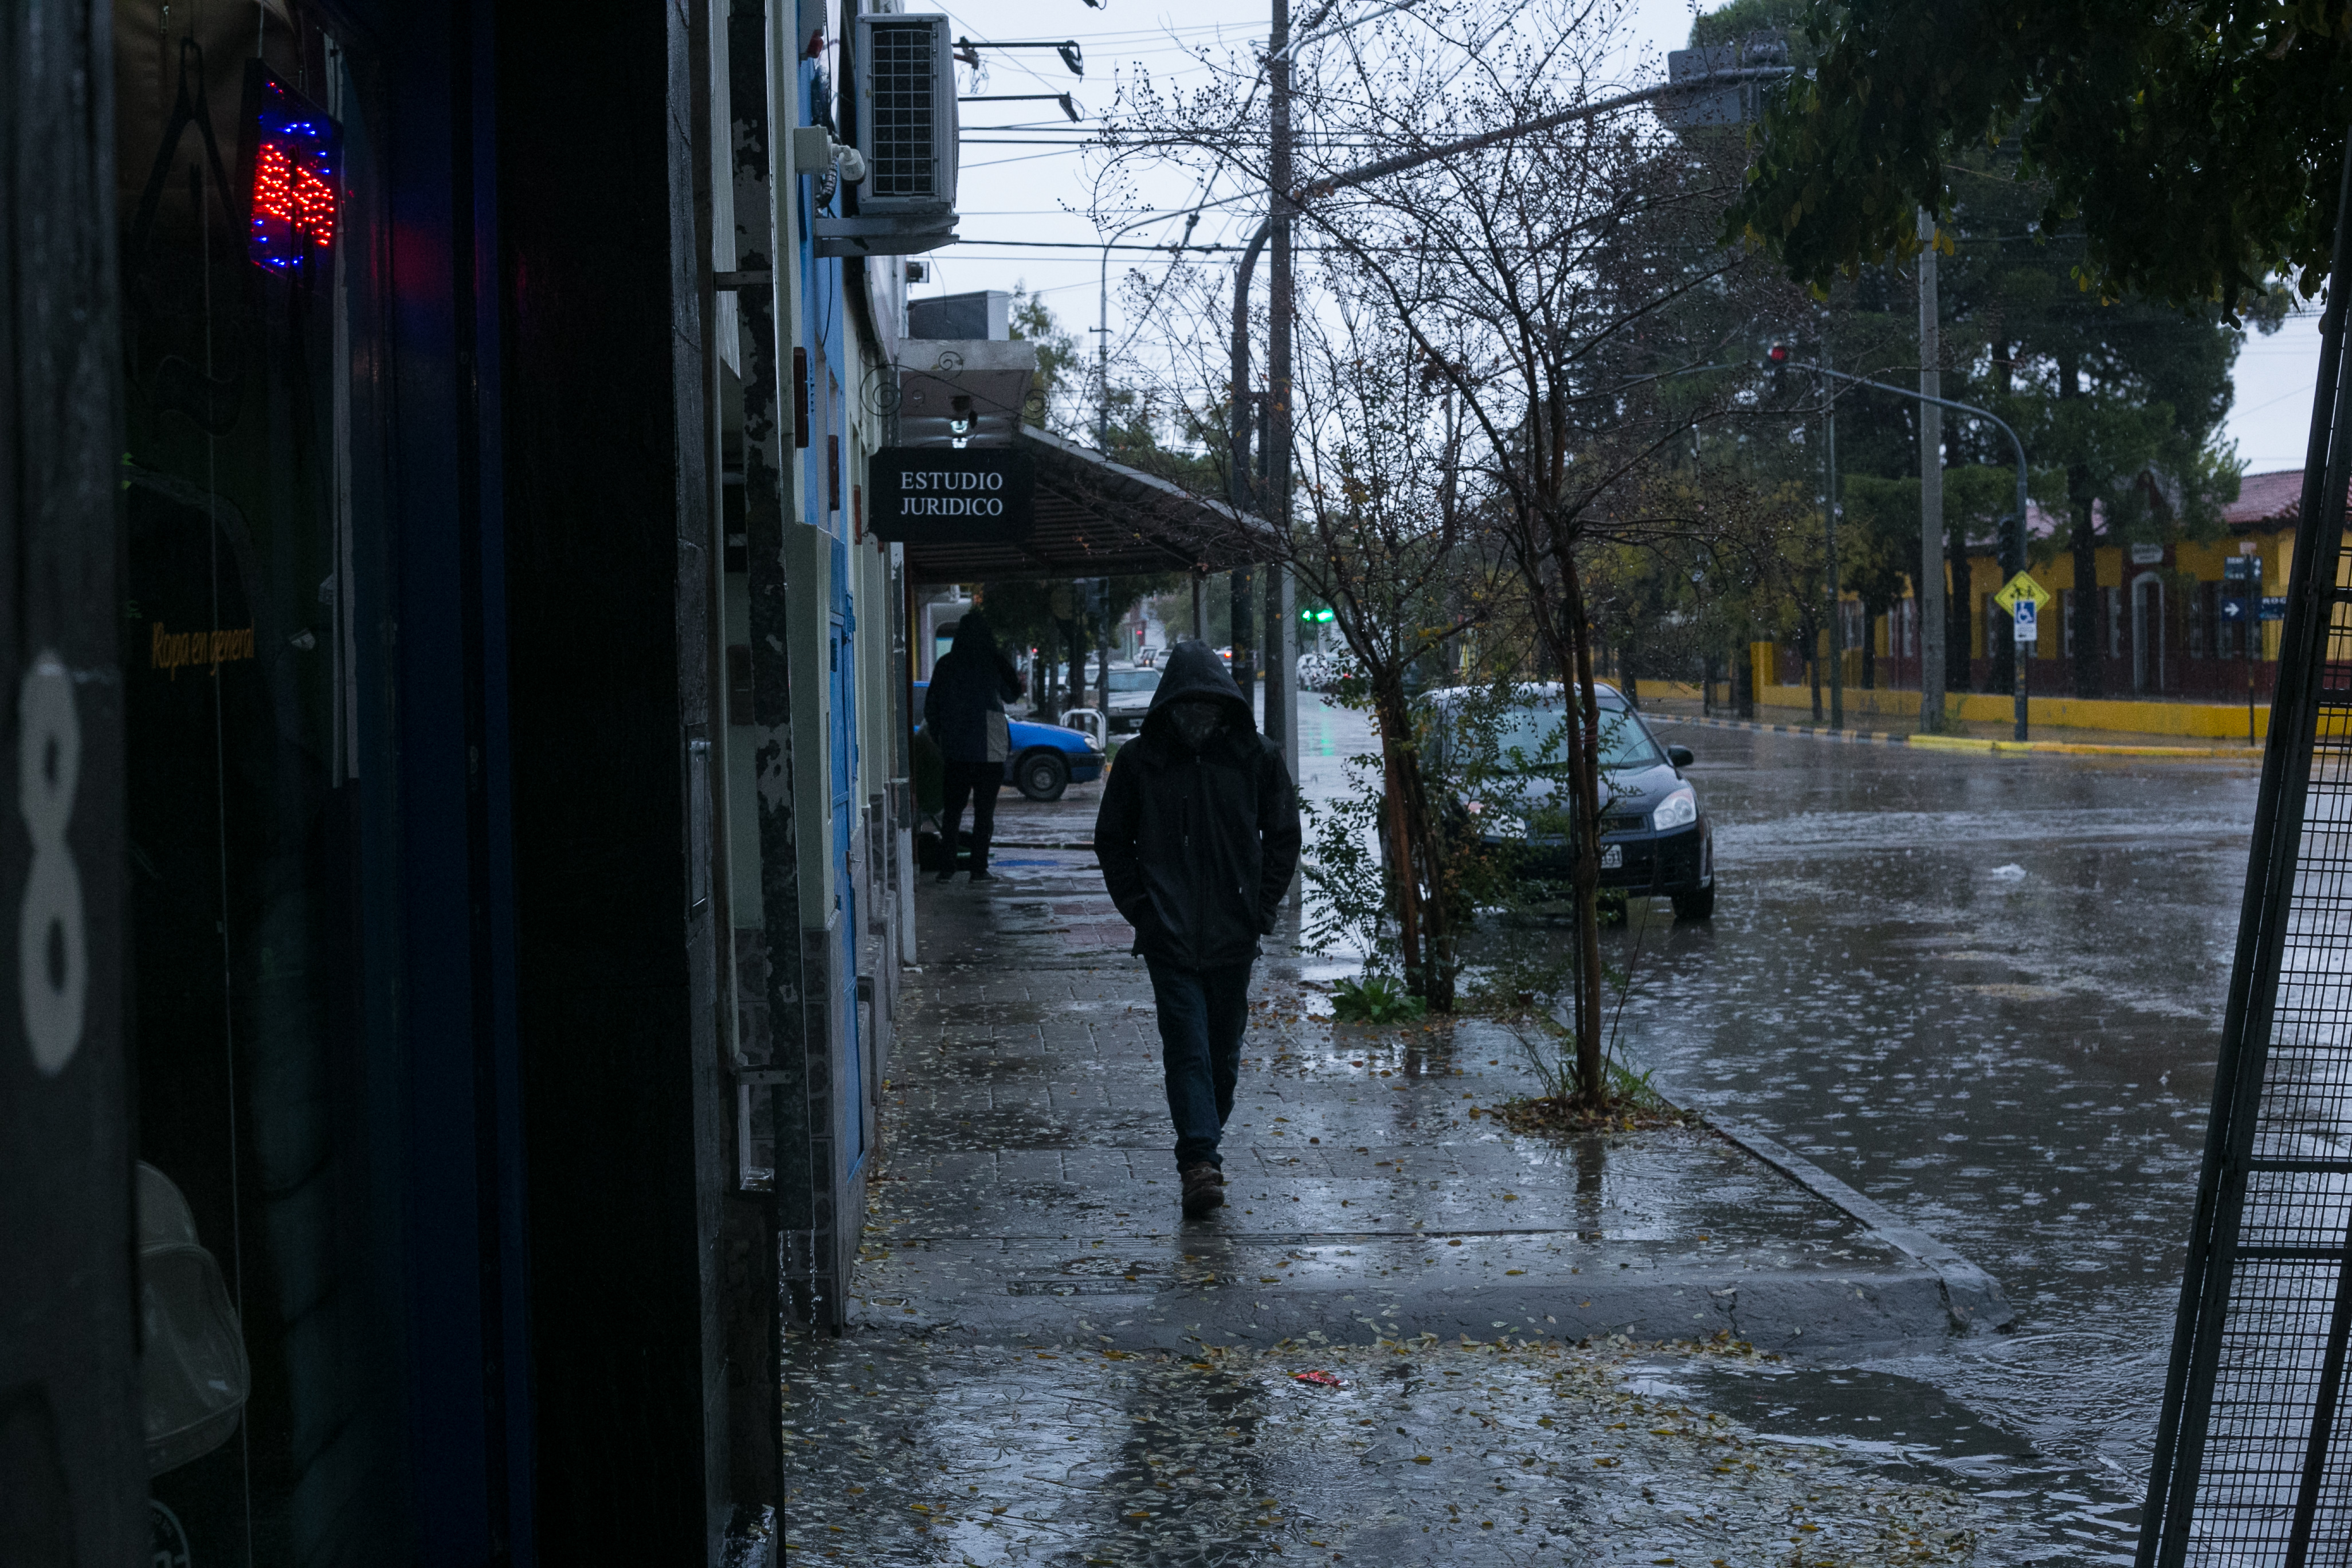 Viedma.30-05-20. Temporal de lluvia en la comerca.

Foto: Pablo Leguizamon